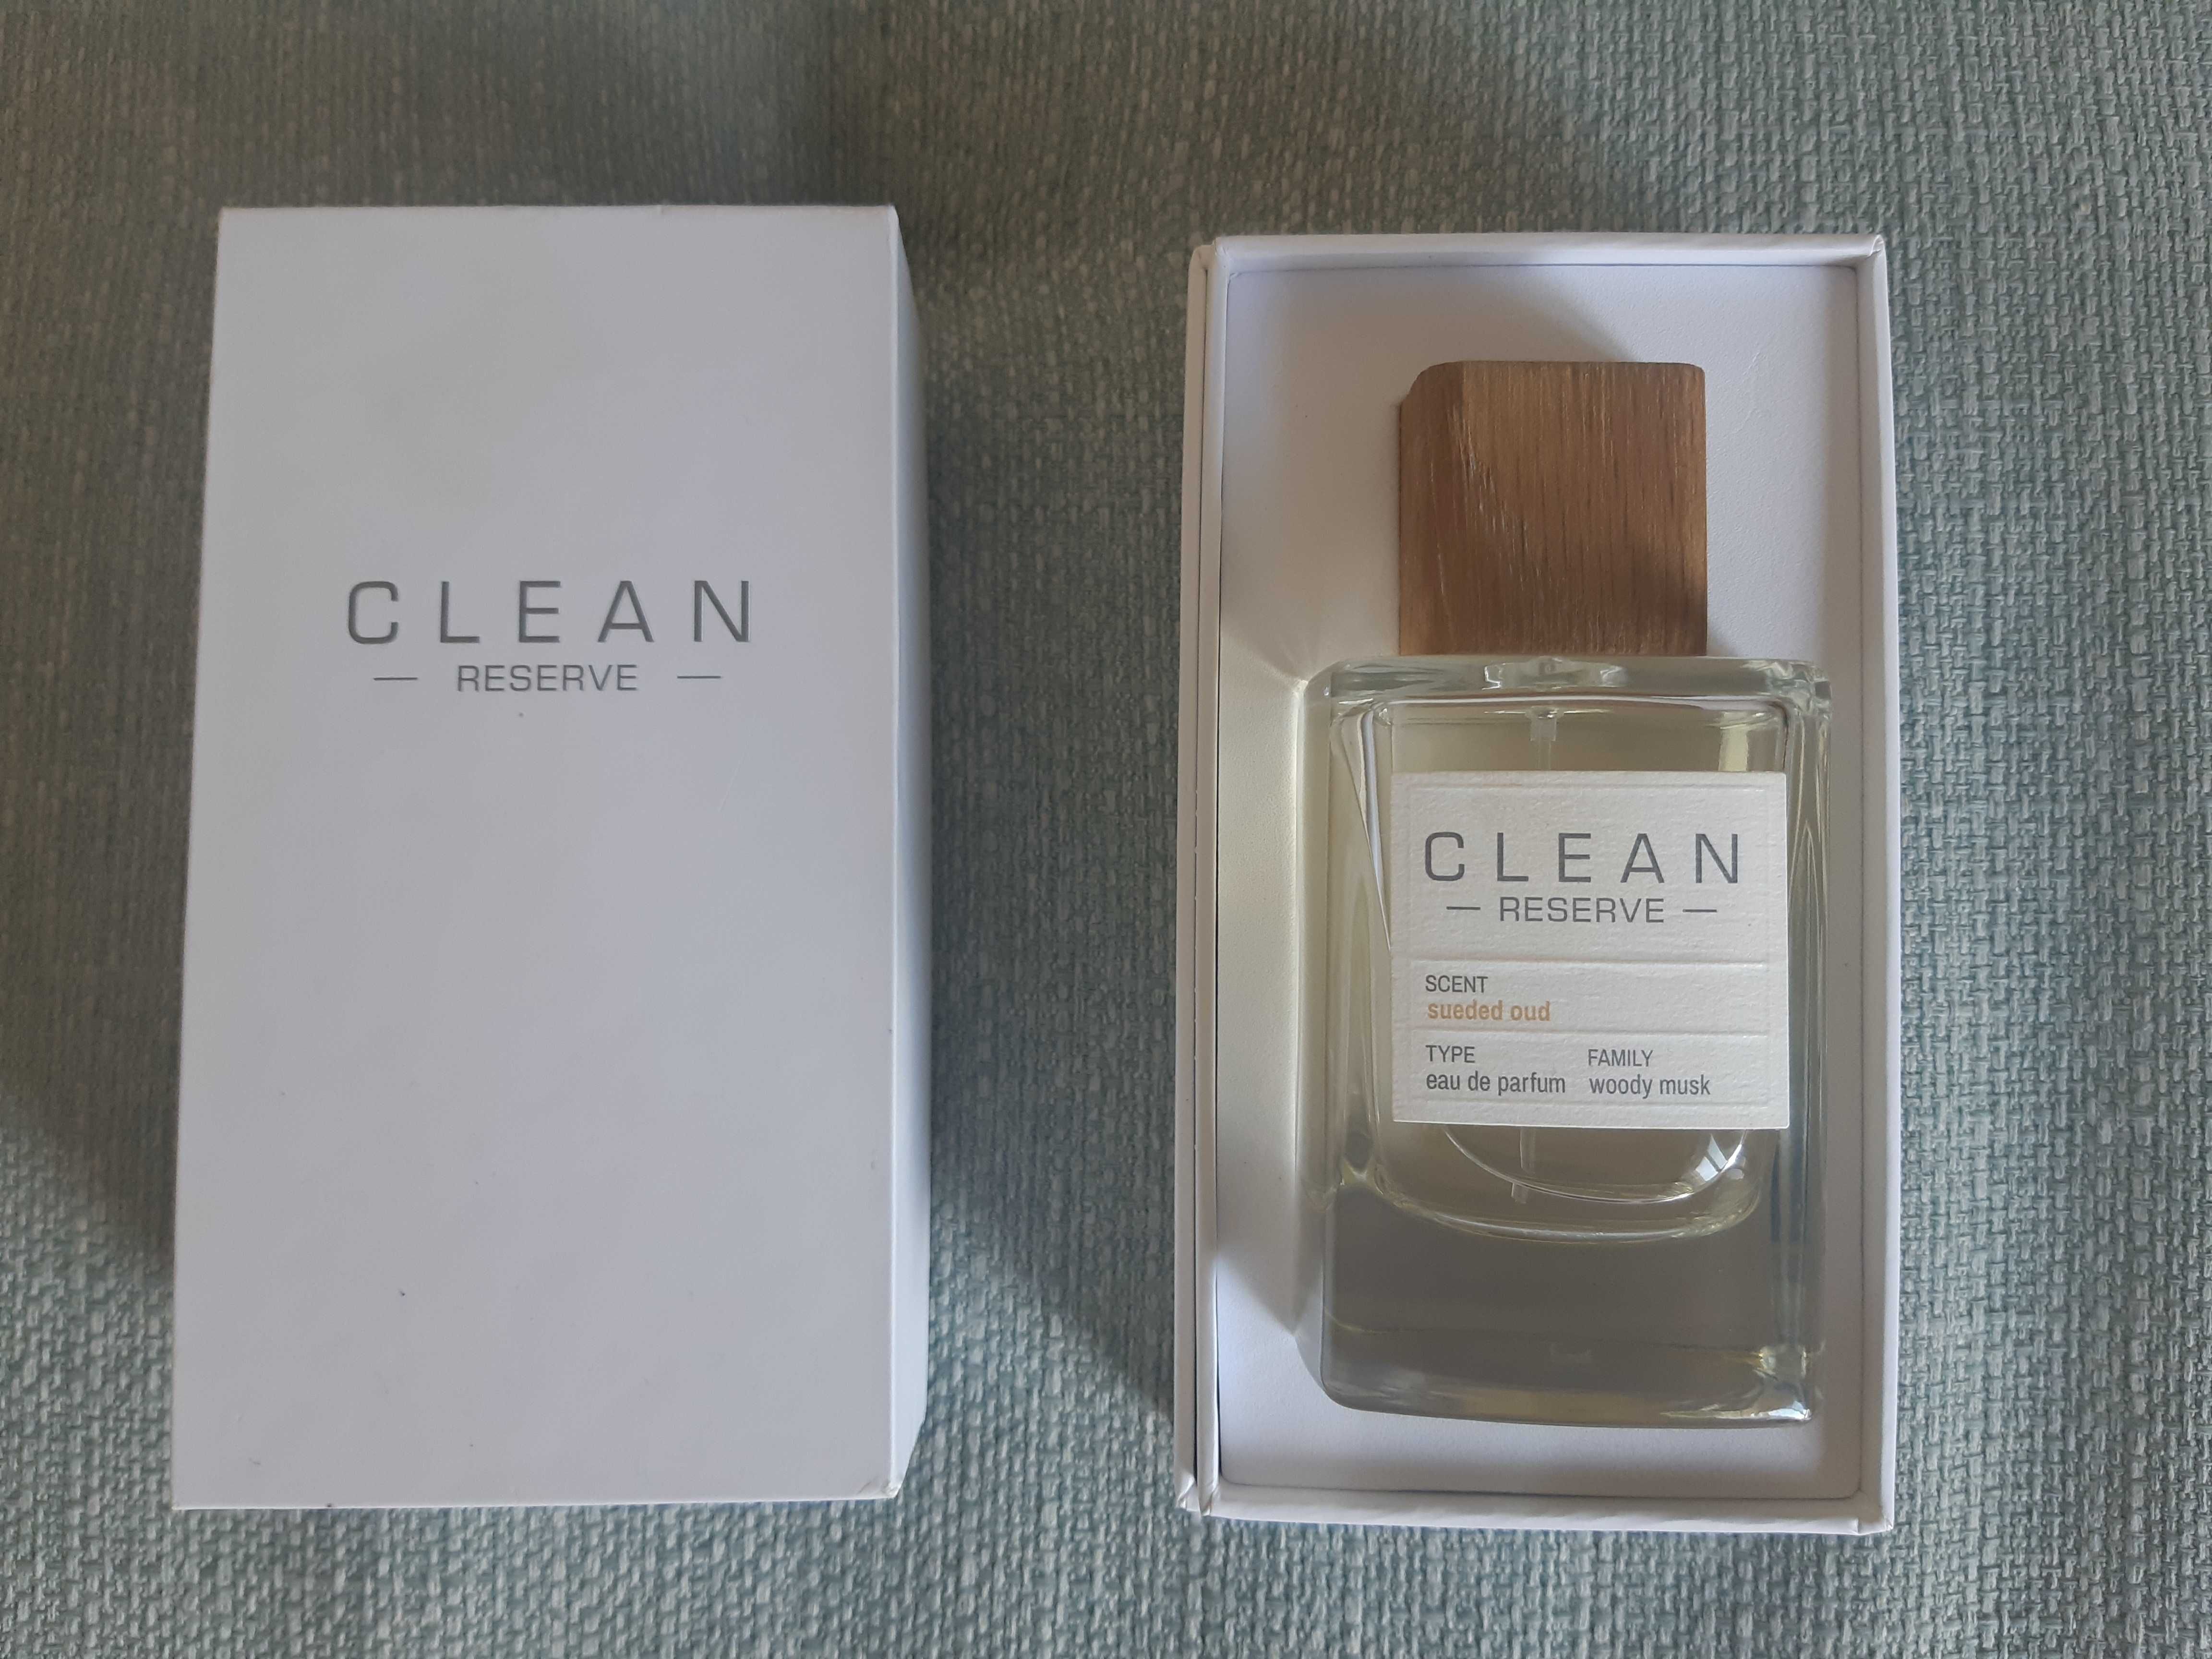 Perfume "Sueded Oud" da marca Clean (homen/mulher)